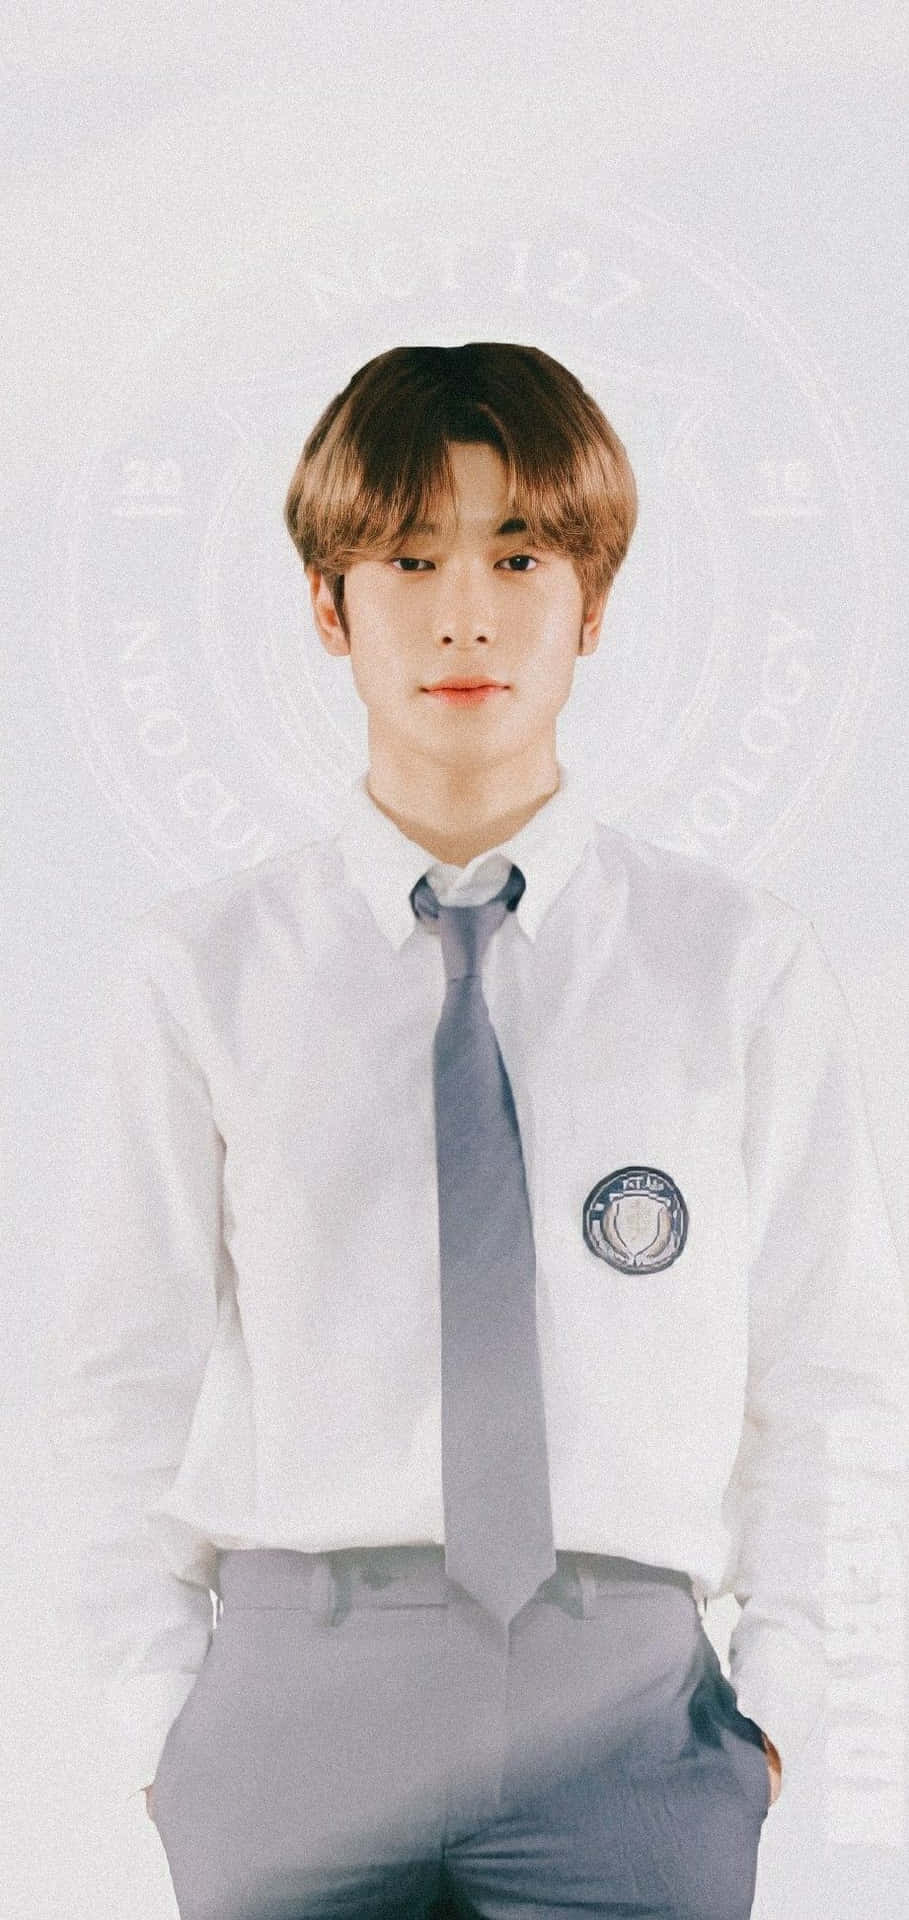 Nct Jaehyun In School Uniform Wallpaper